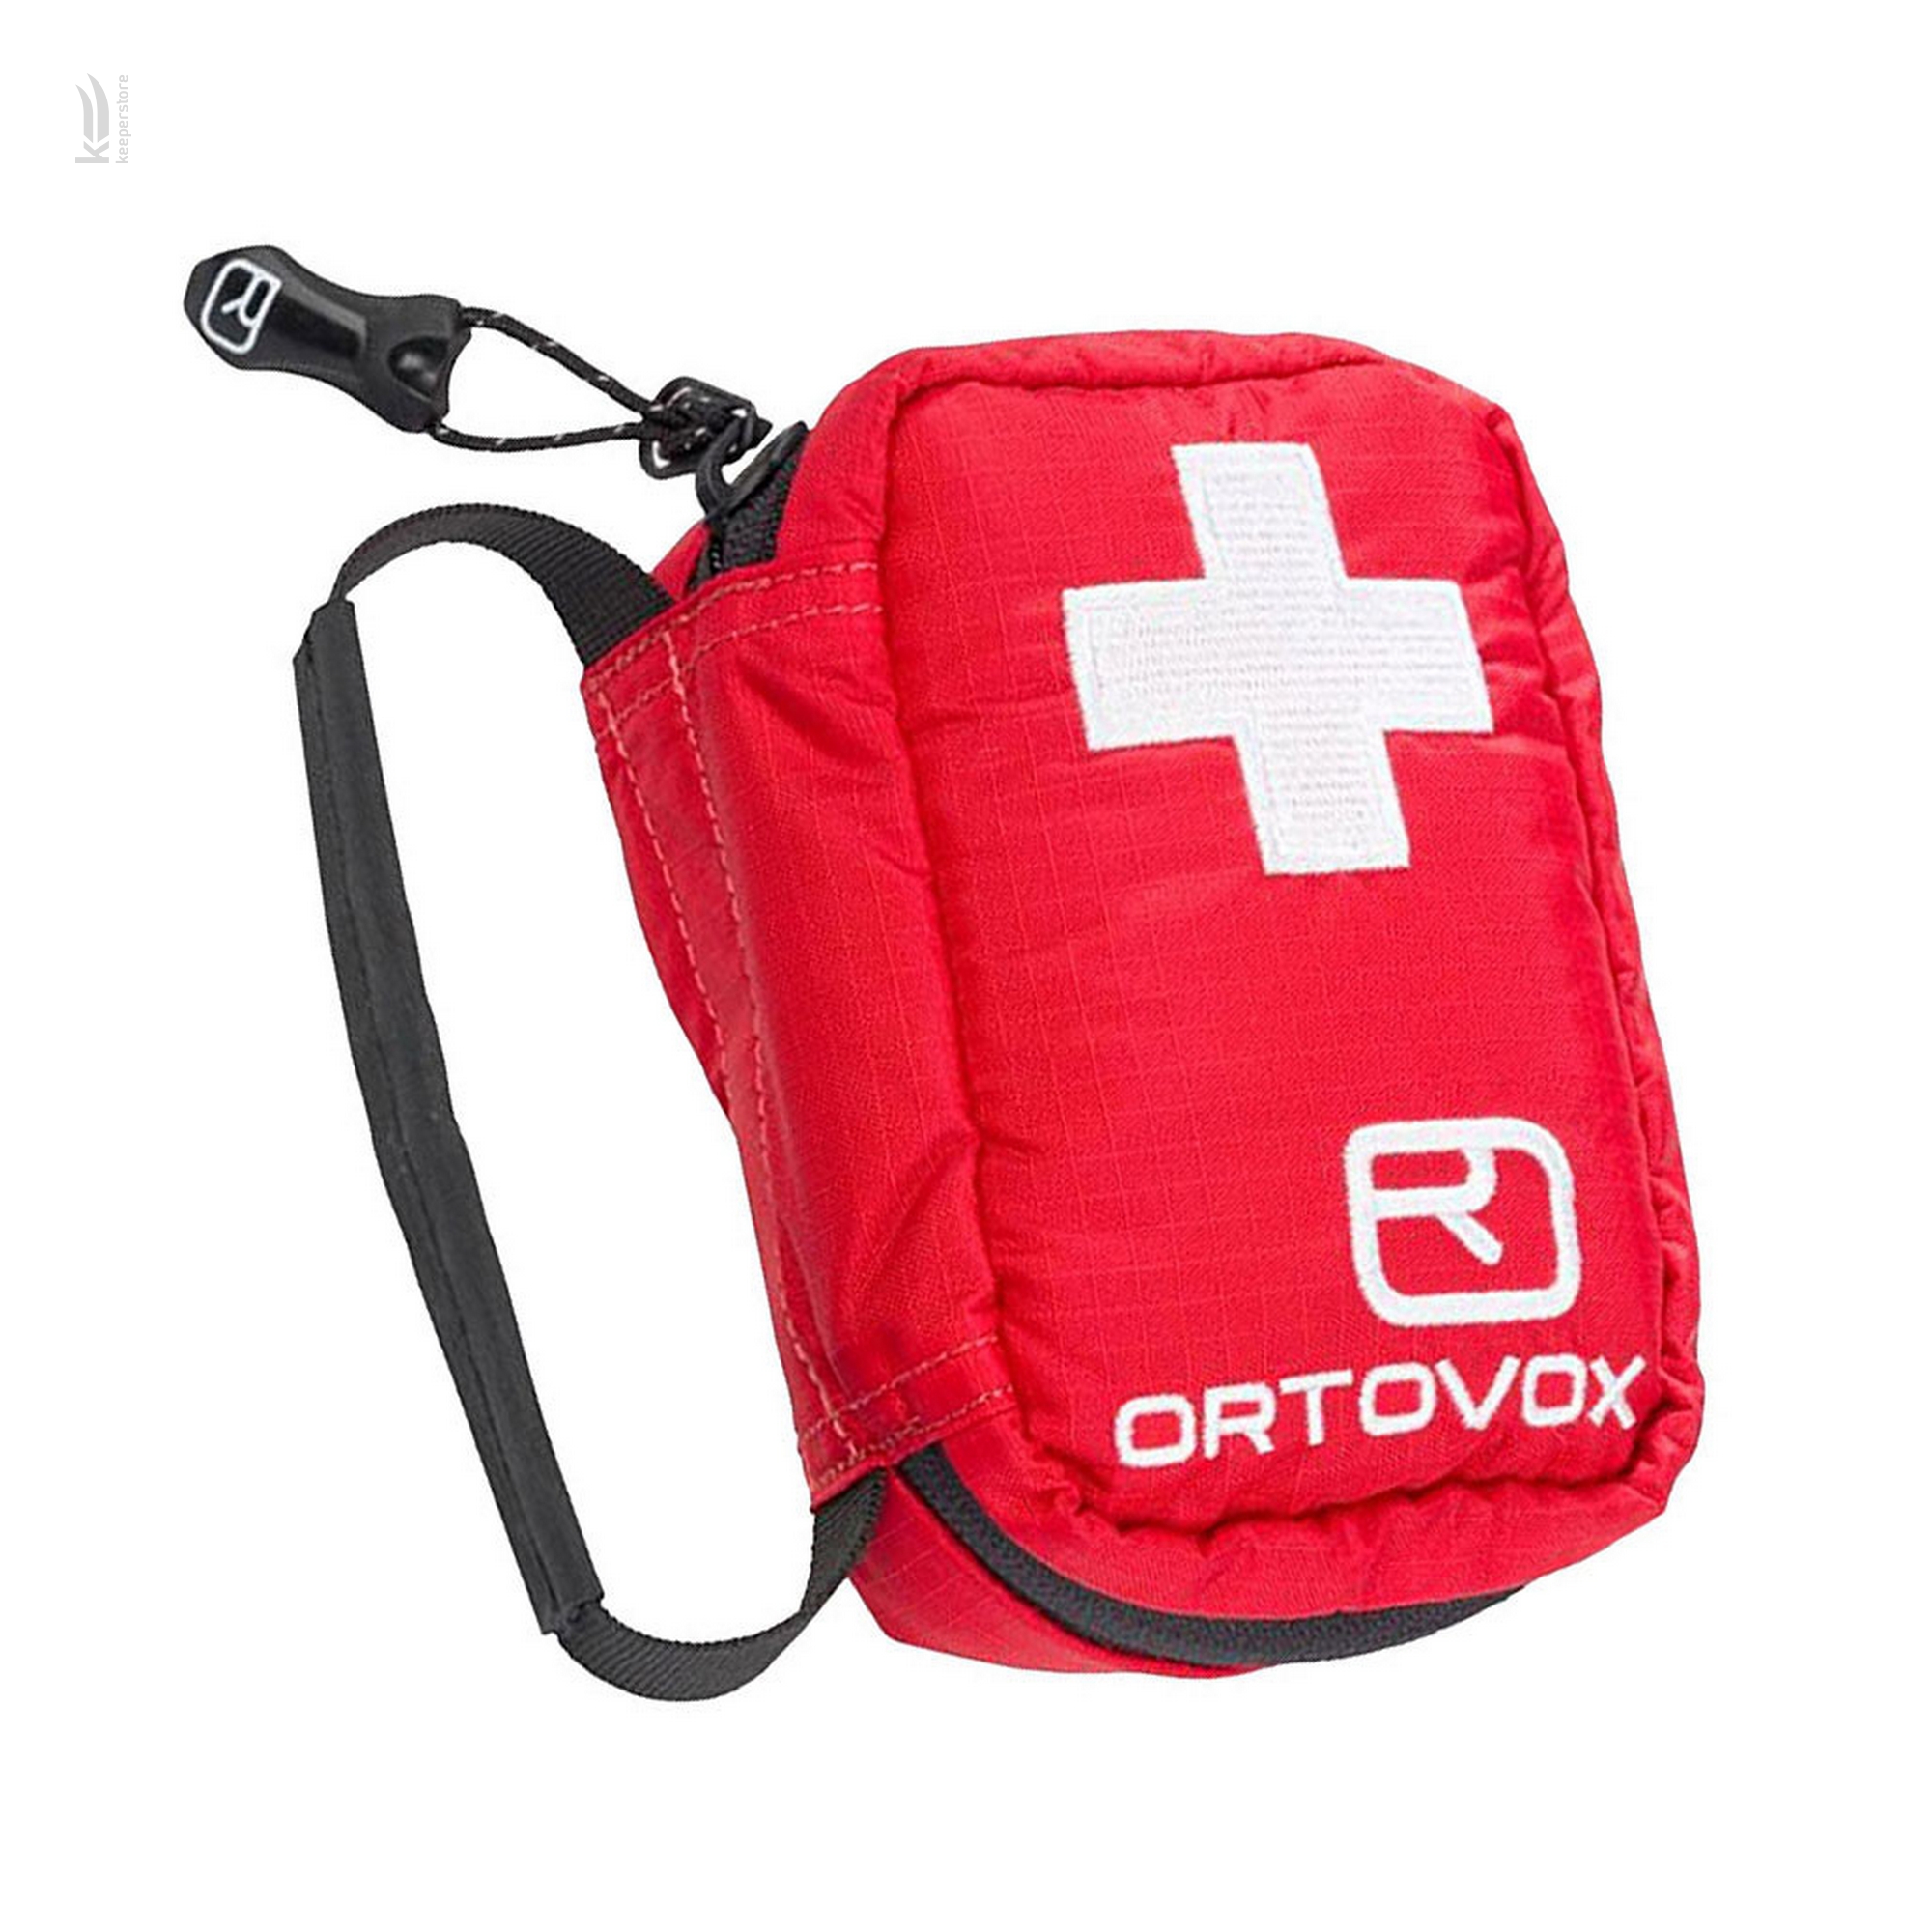 Цена комплект первой помощи Ortovox First Aid Mini Red в Киеве